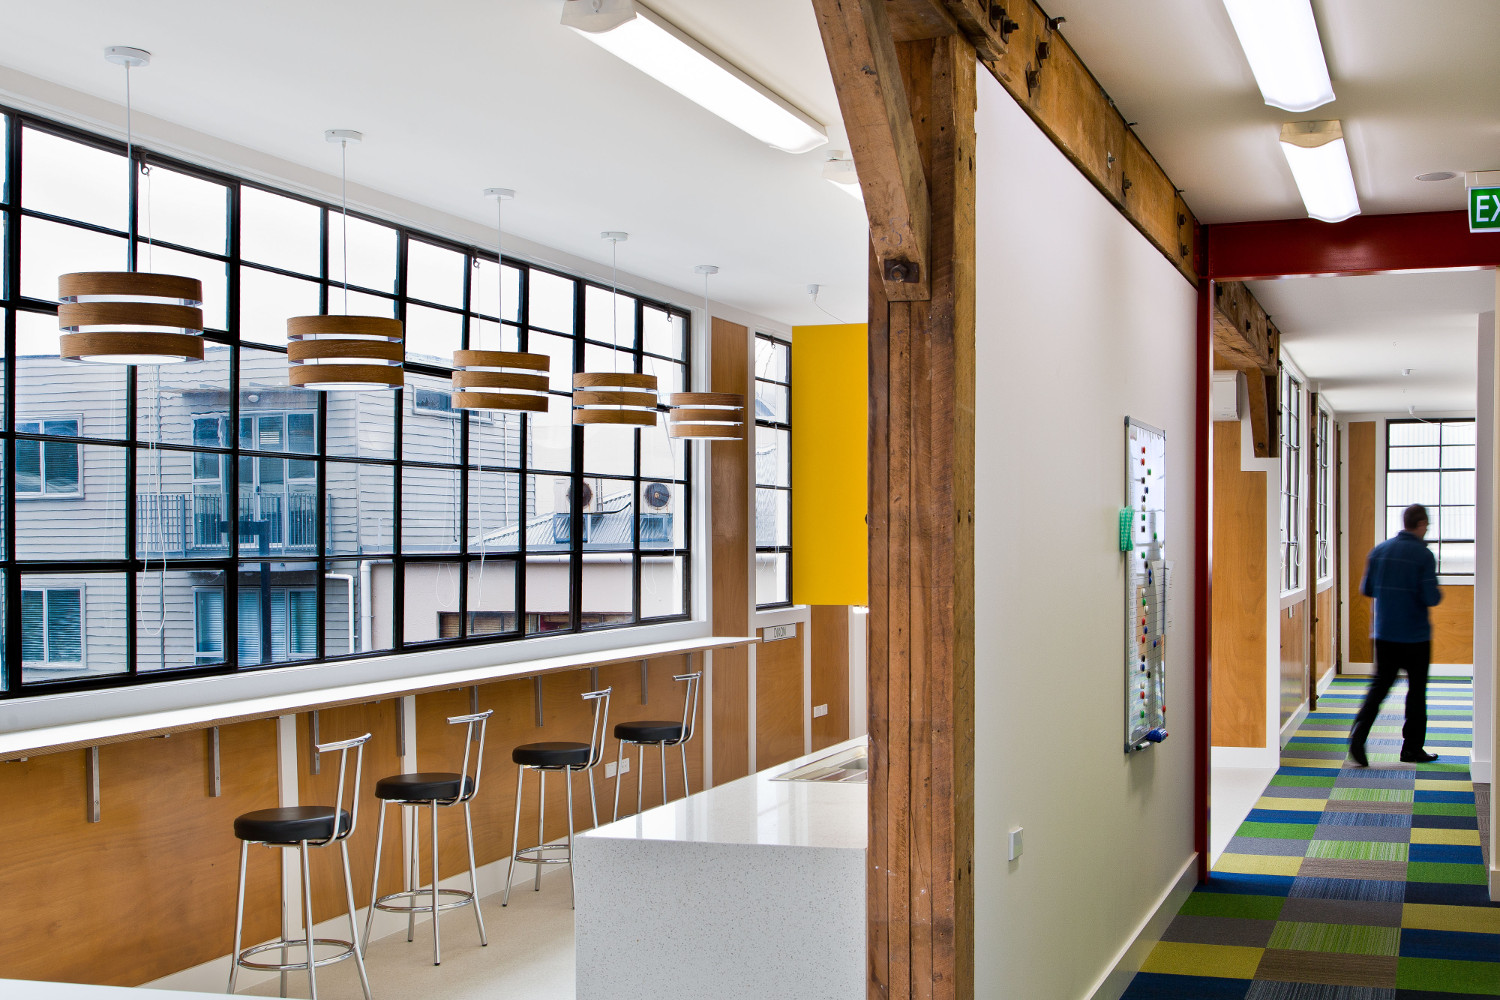 Life Centre Wellington – contemporary interior space